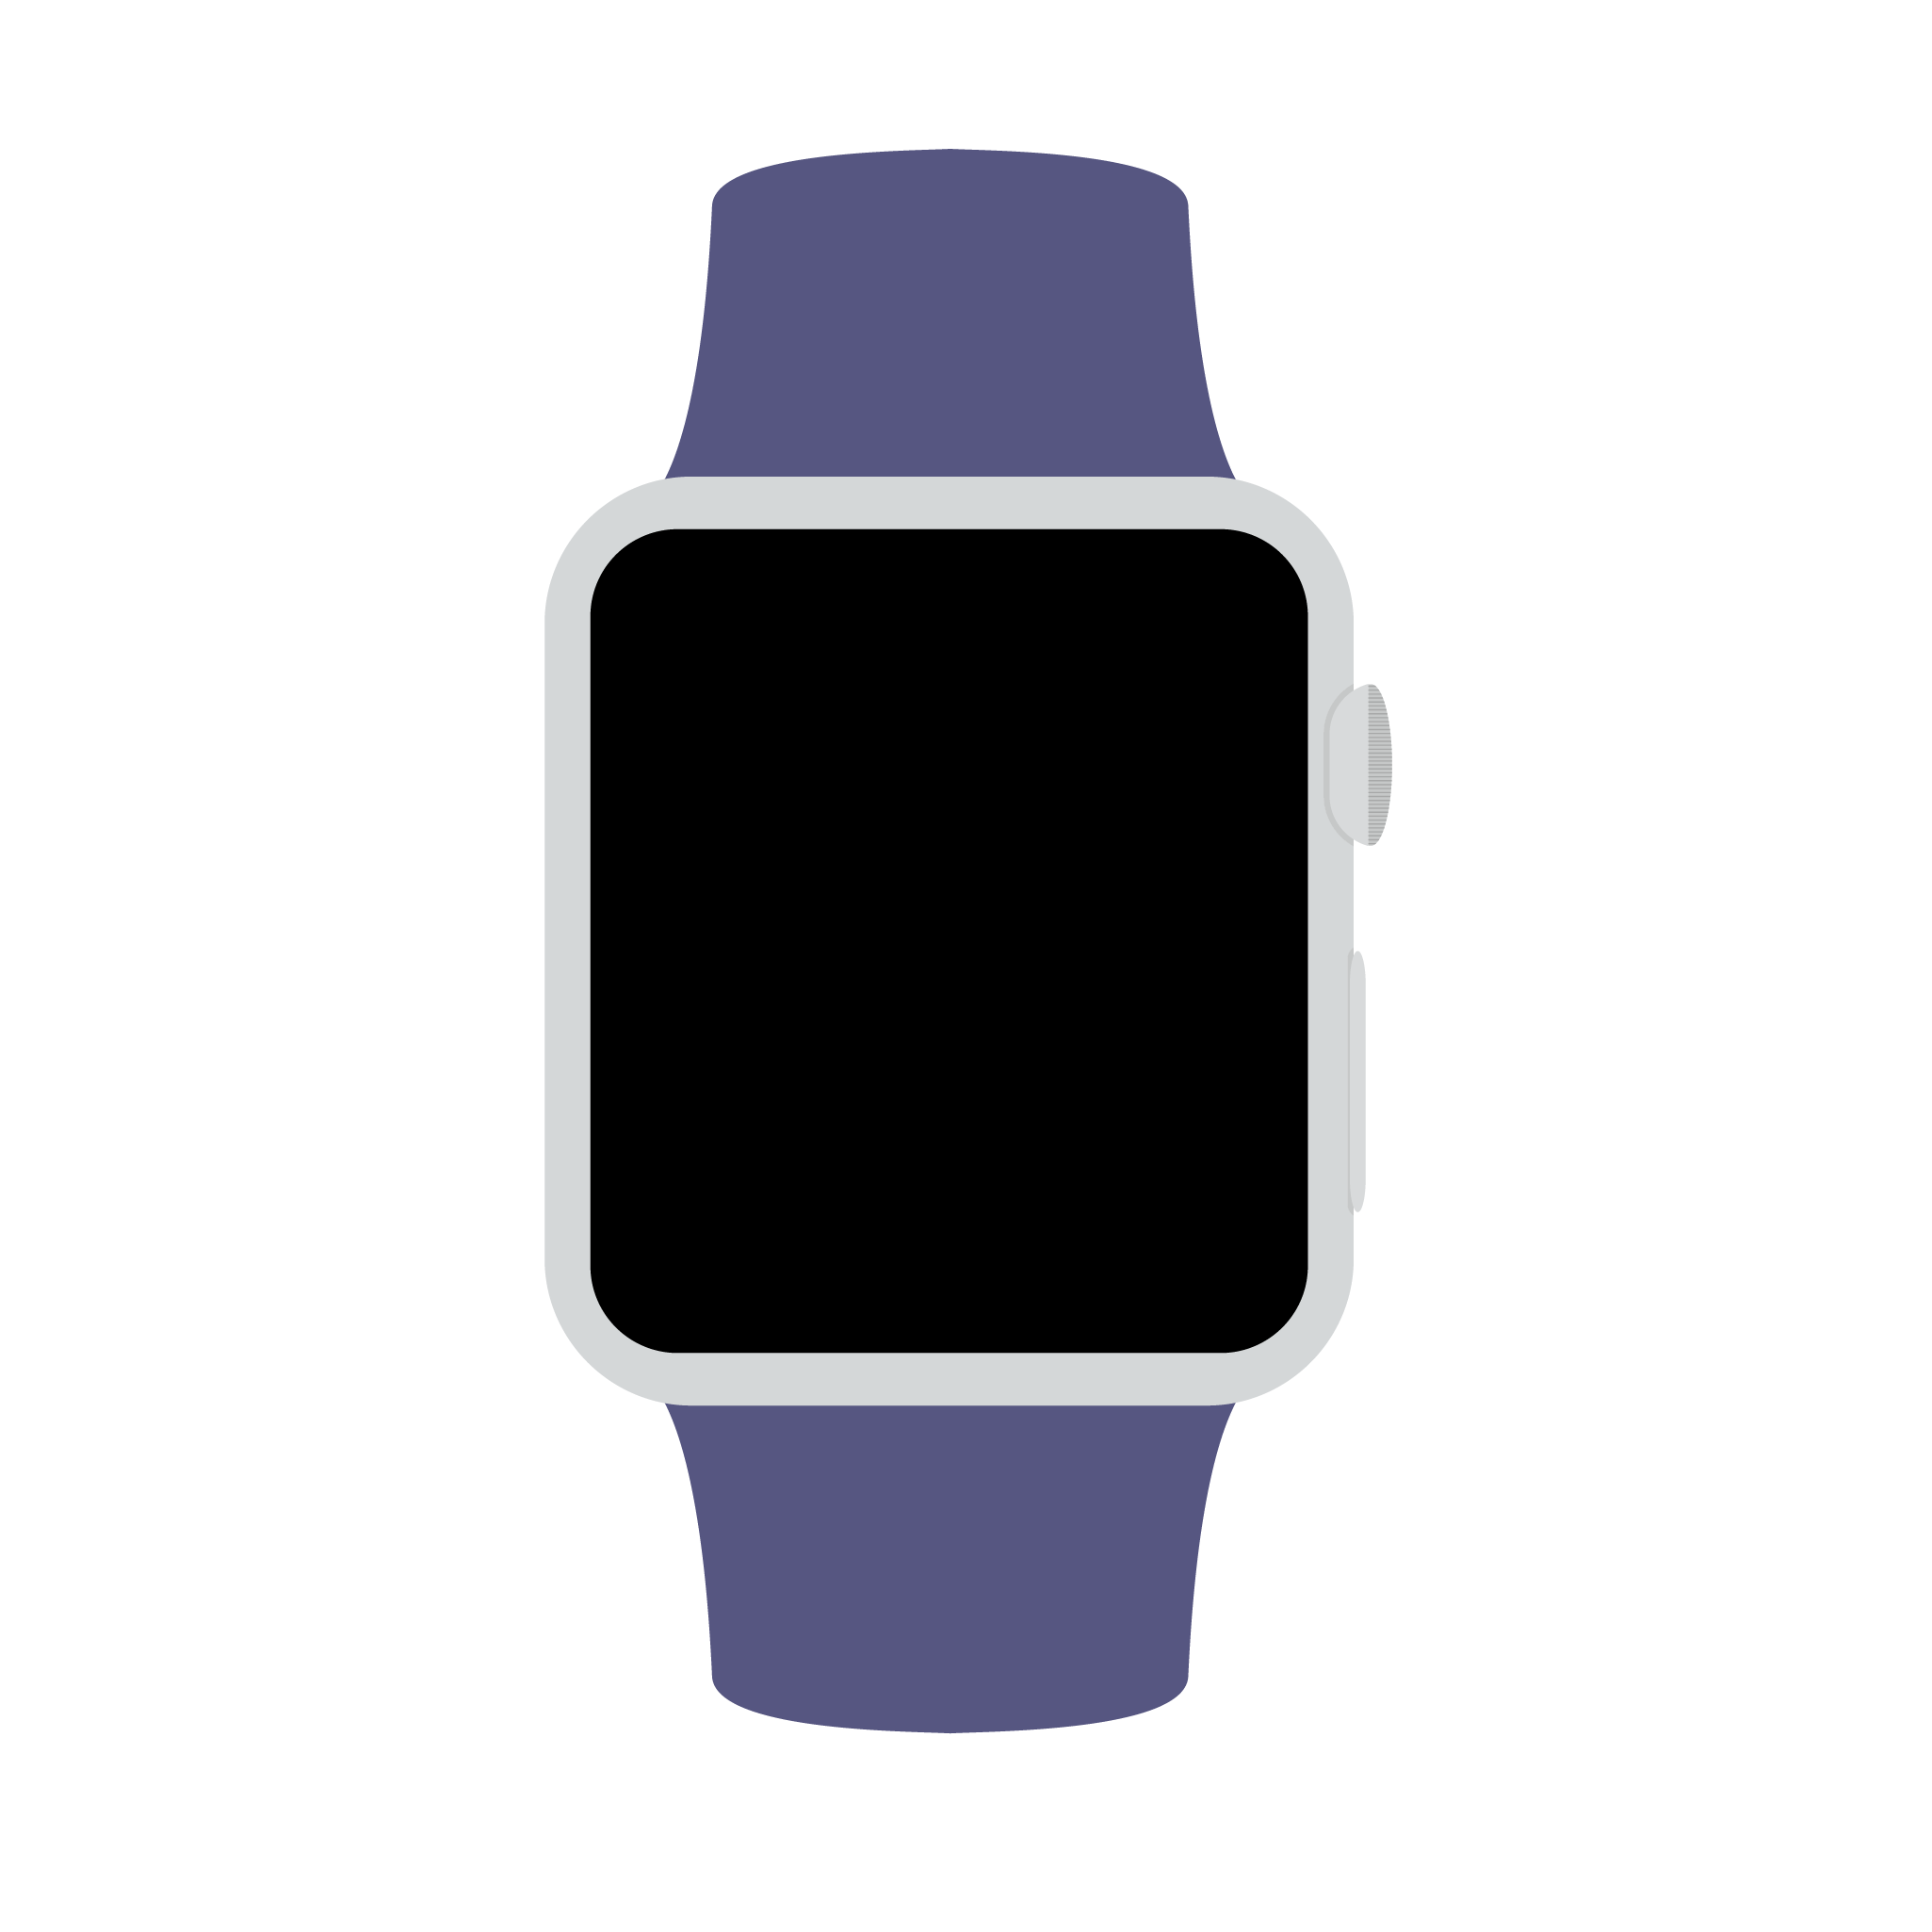 Blue watch illustration